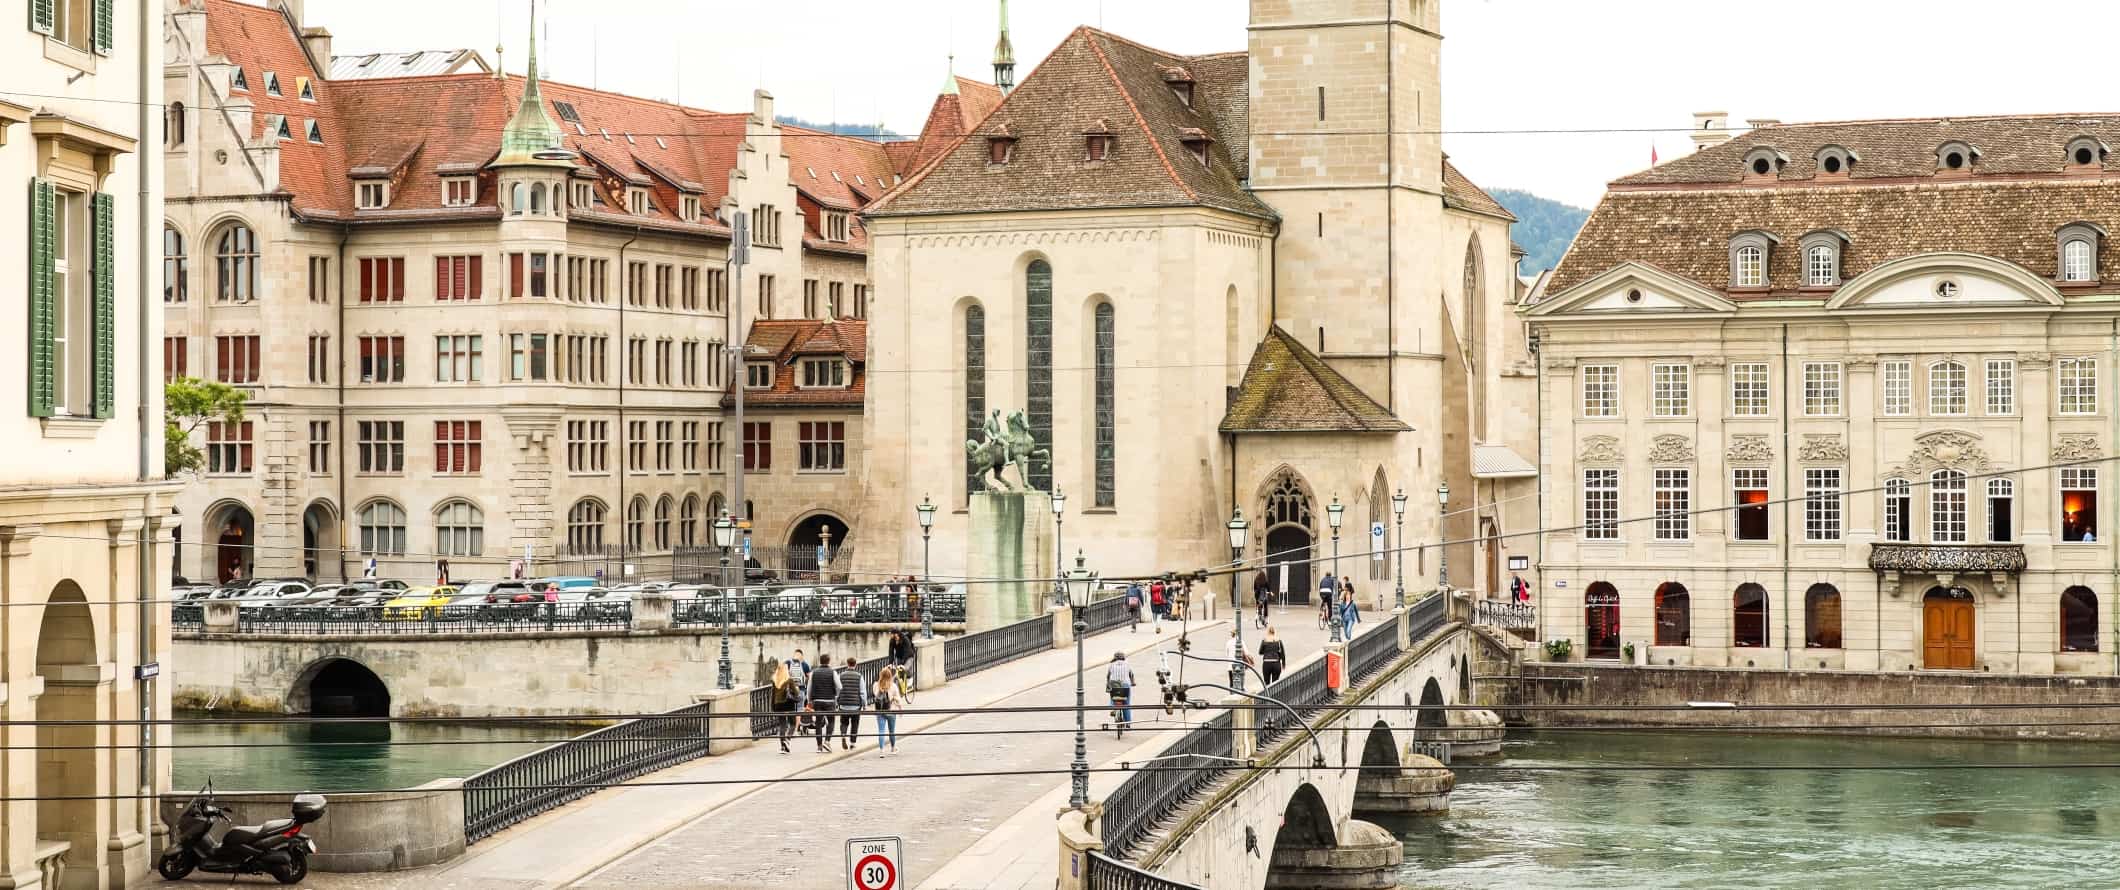 People walking across a stone bridge in the historic center of Zurich, Switzerland